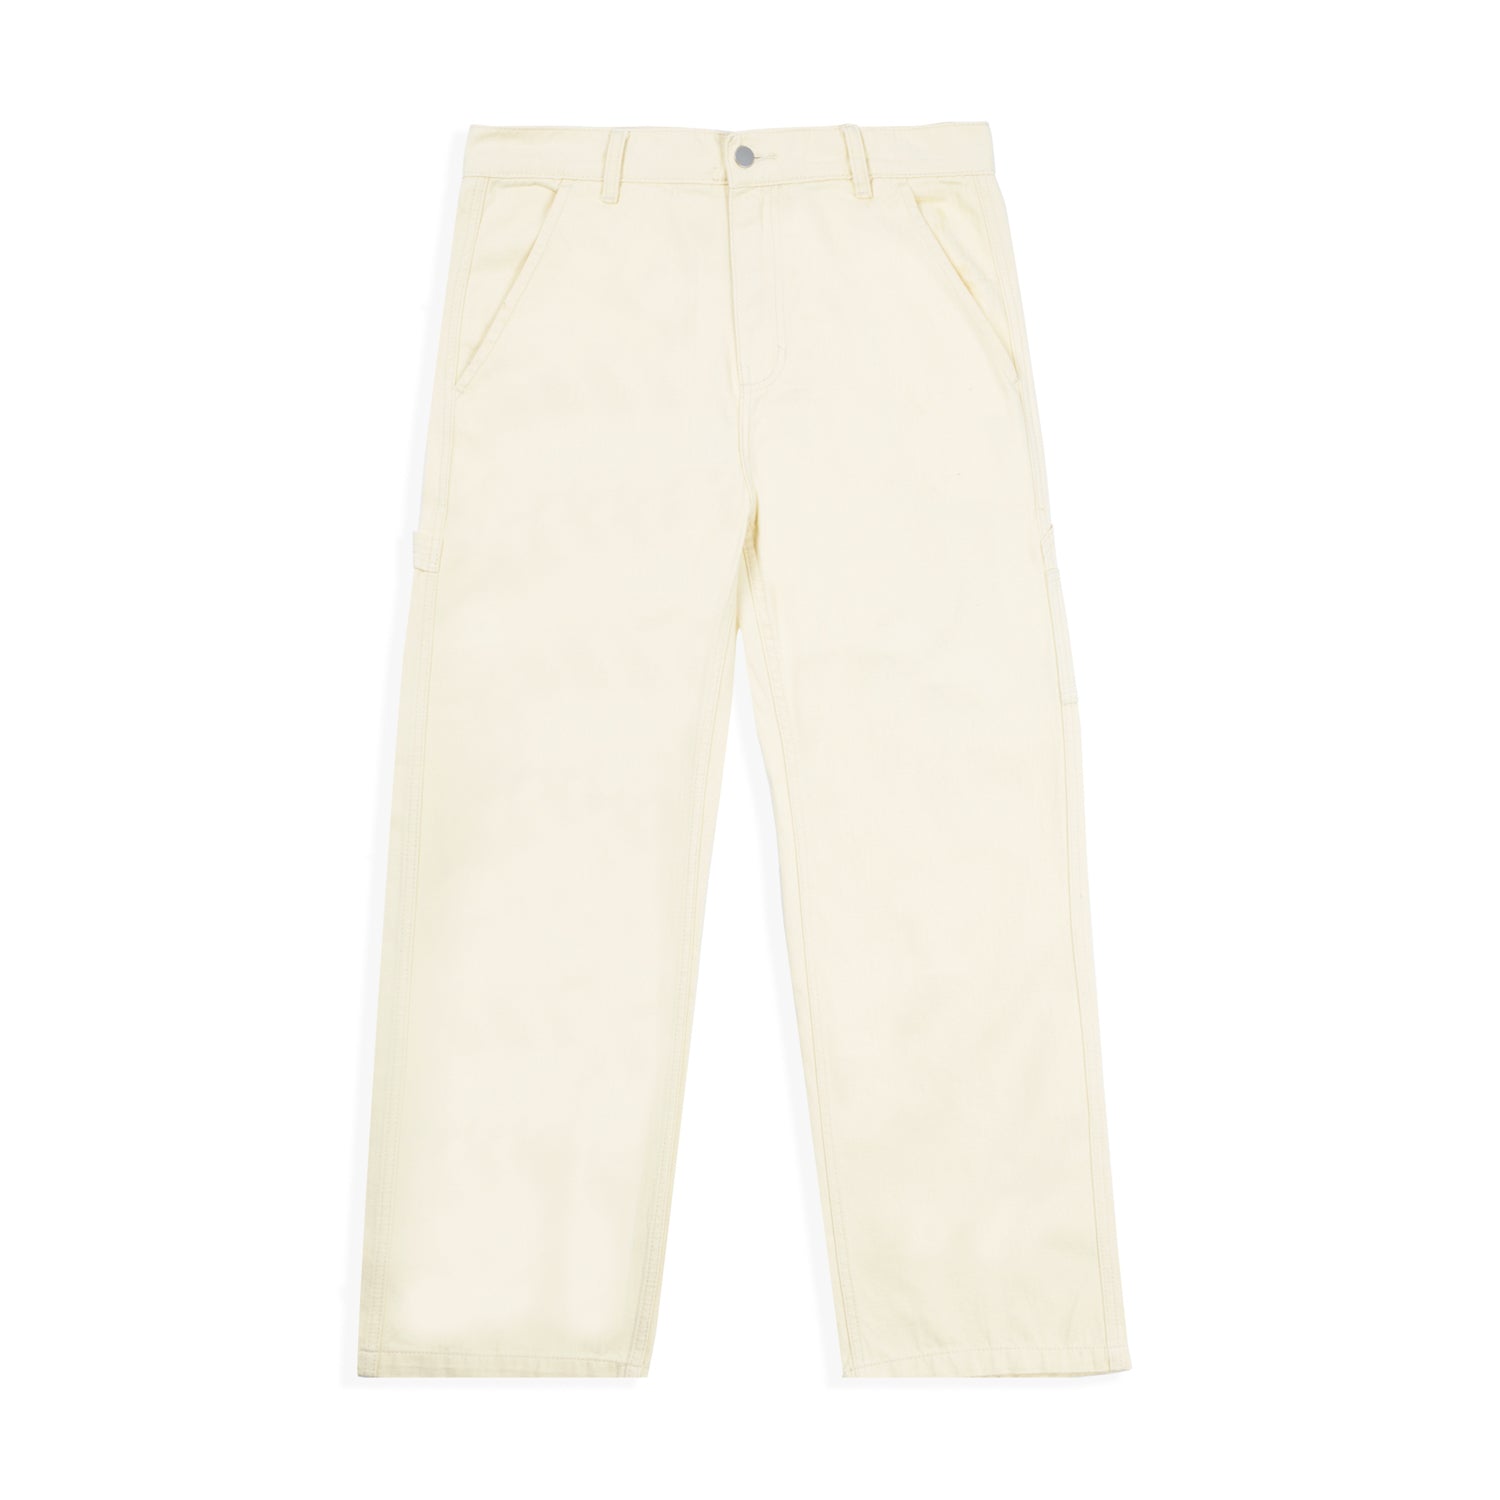 Herringbone Painter Pants, Cream